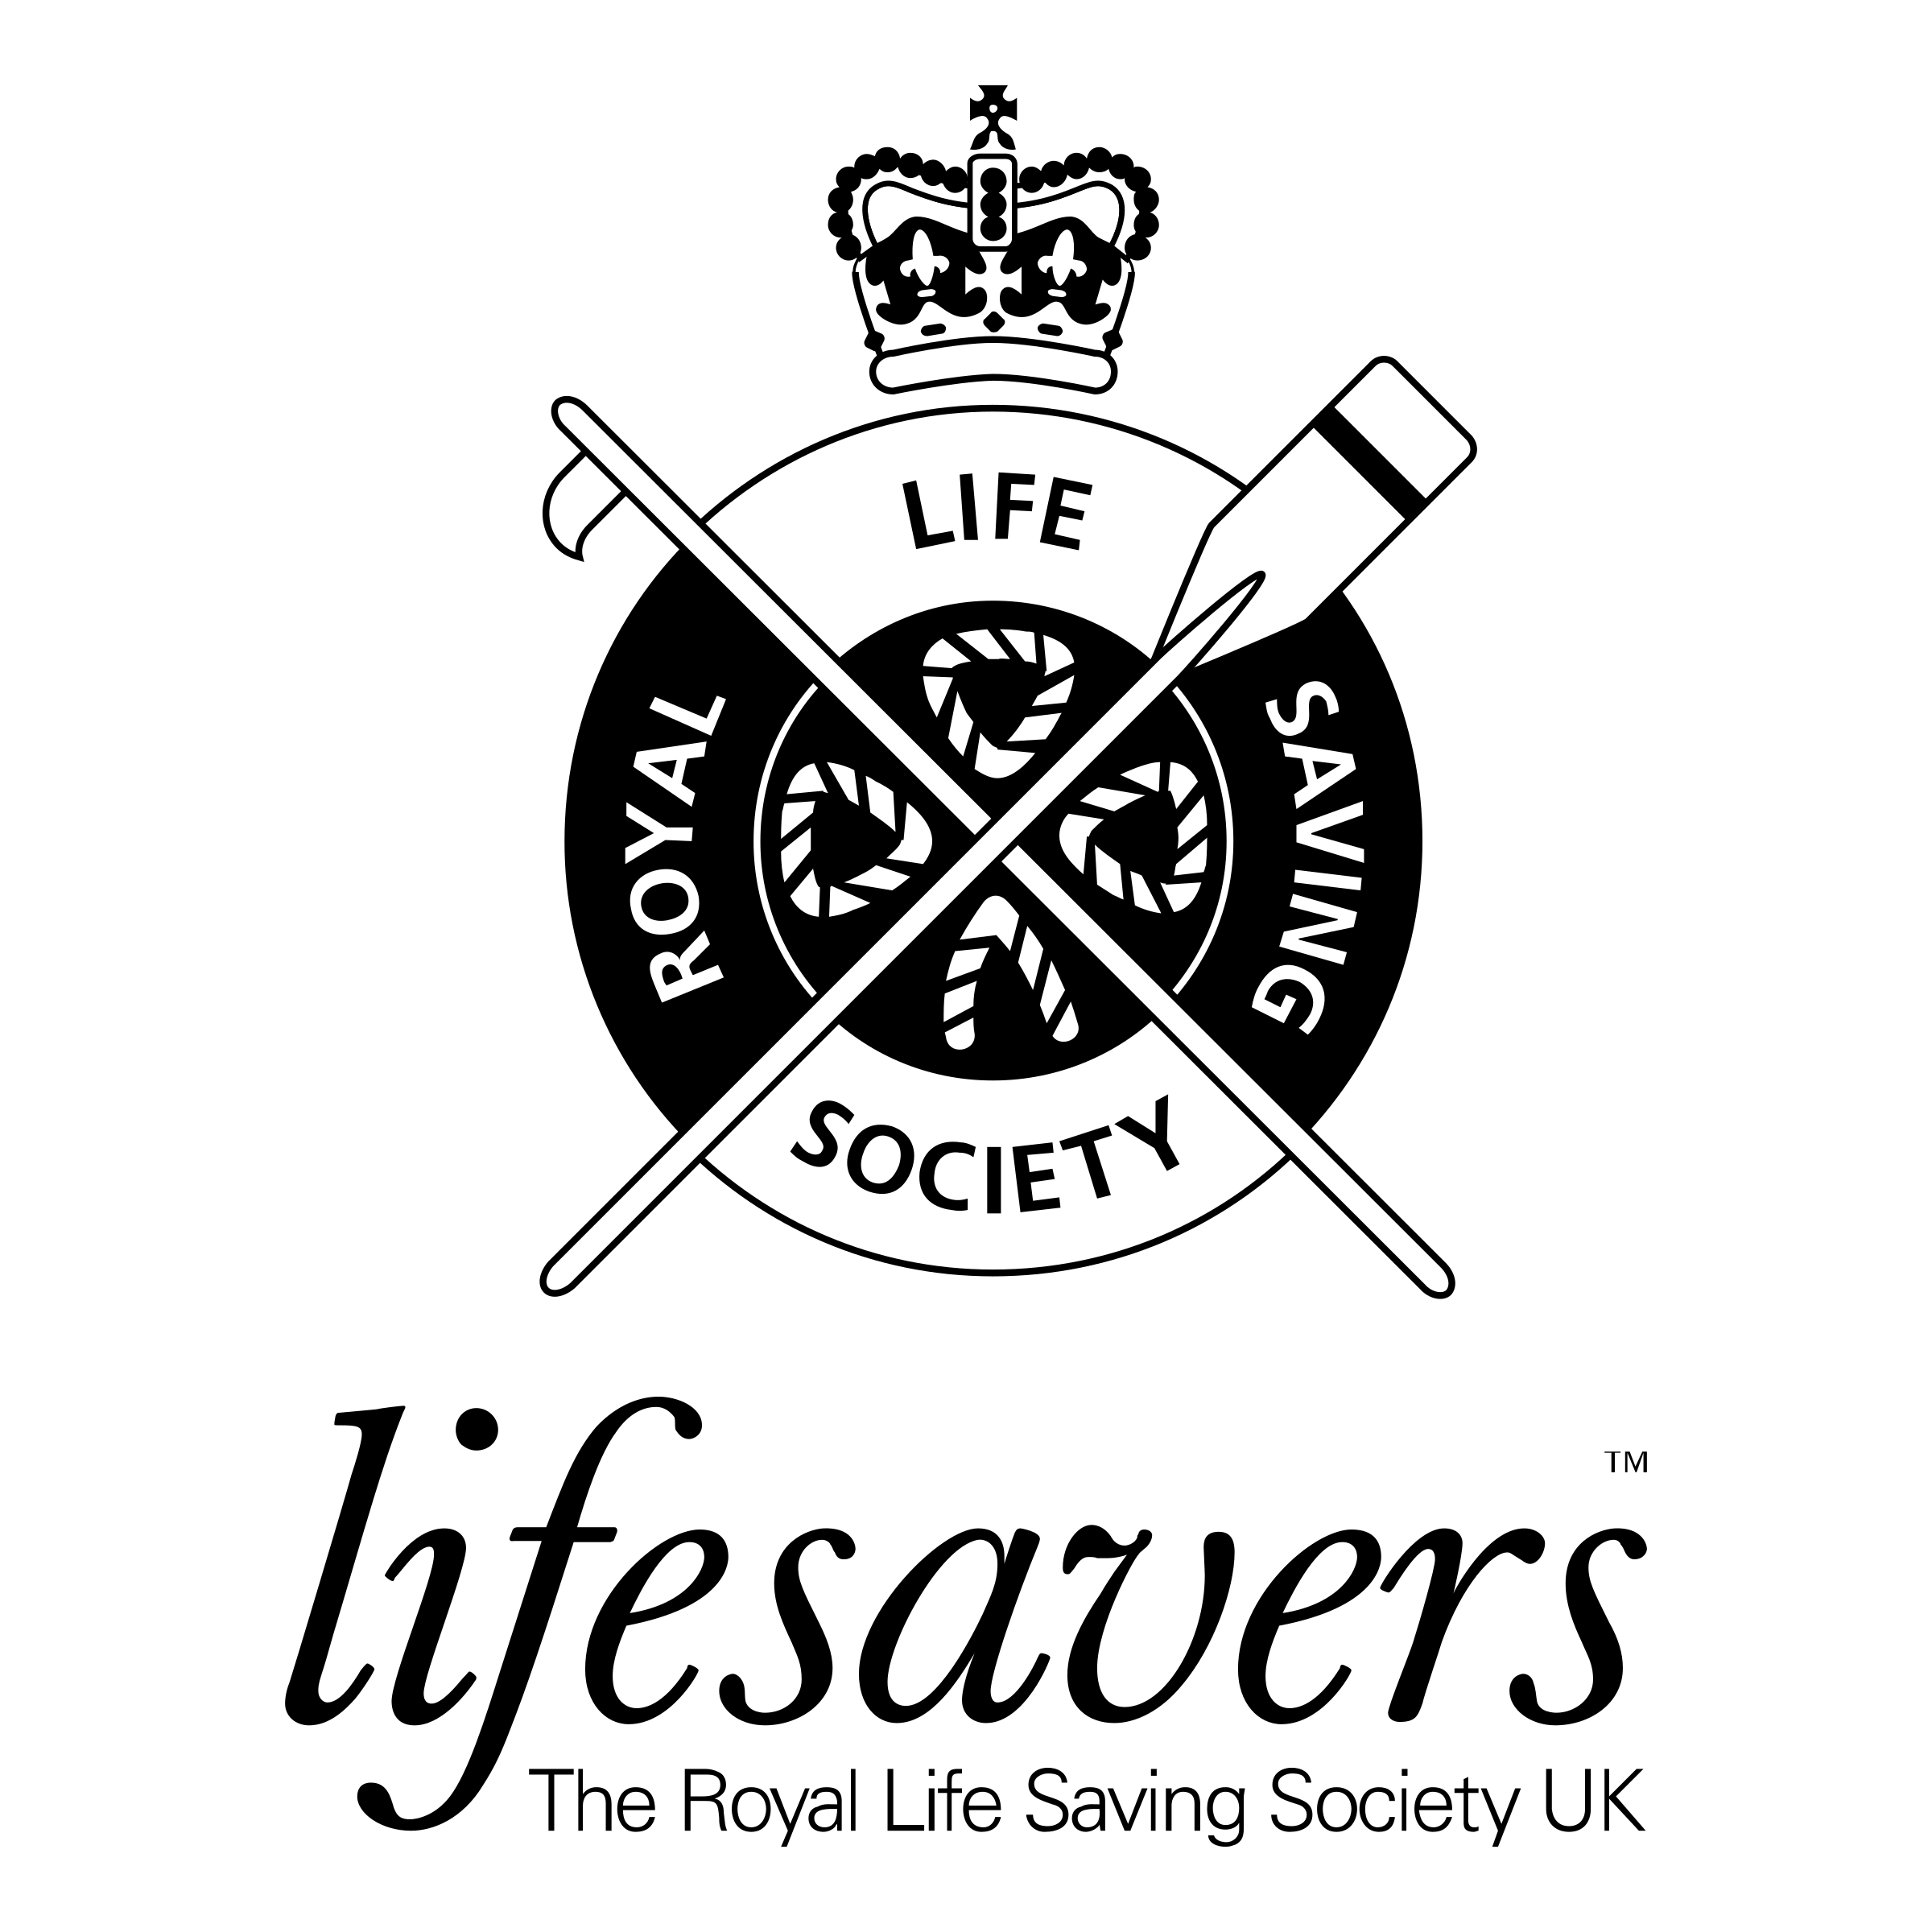 Lifesavers Logo - Lifesavers Logo PNG Transparent & SVG Vector - Freebie Supply